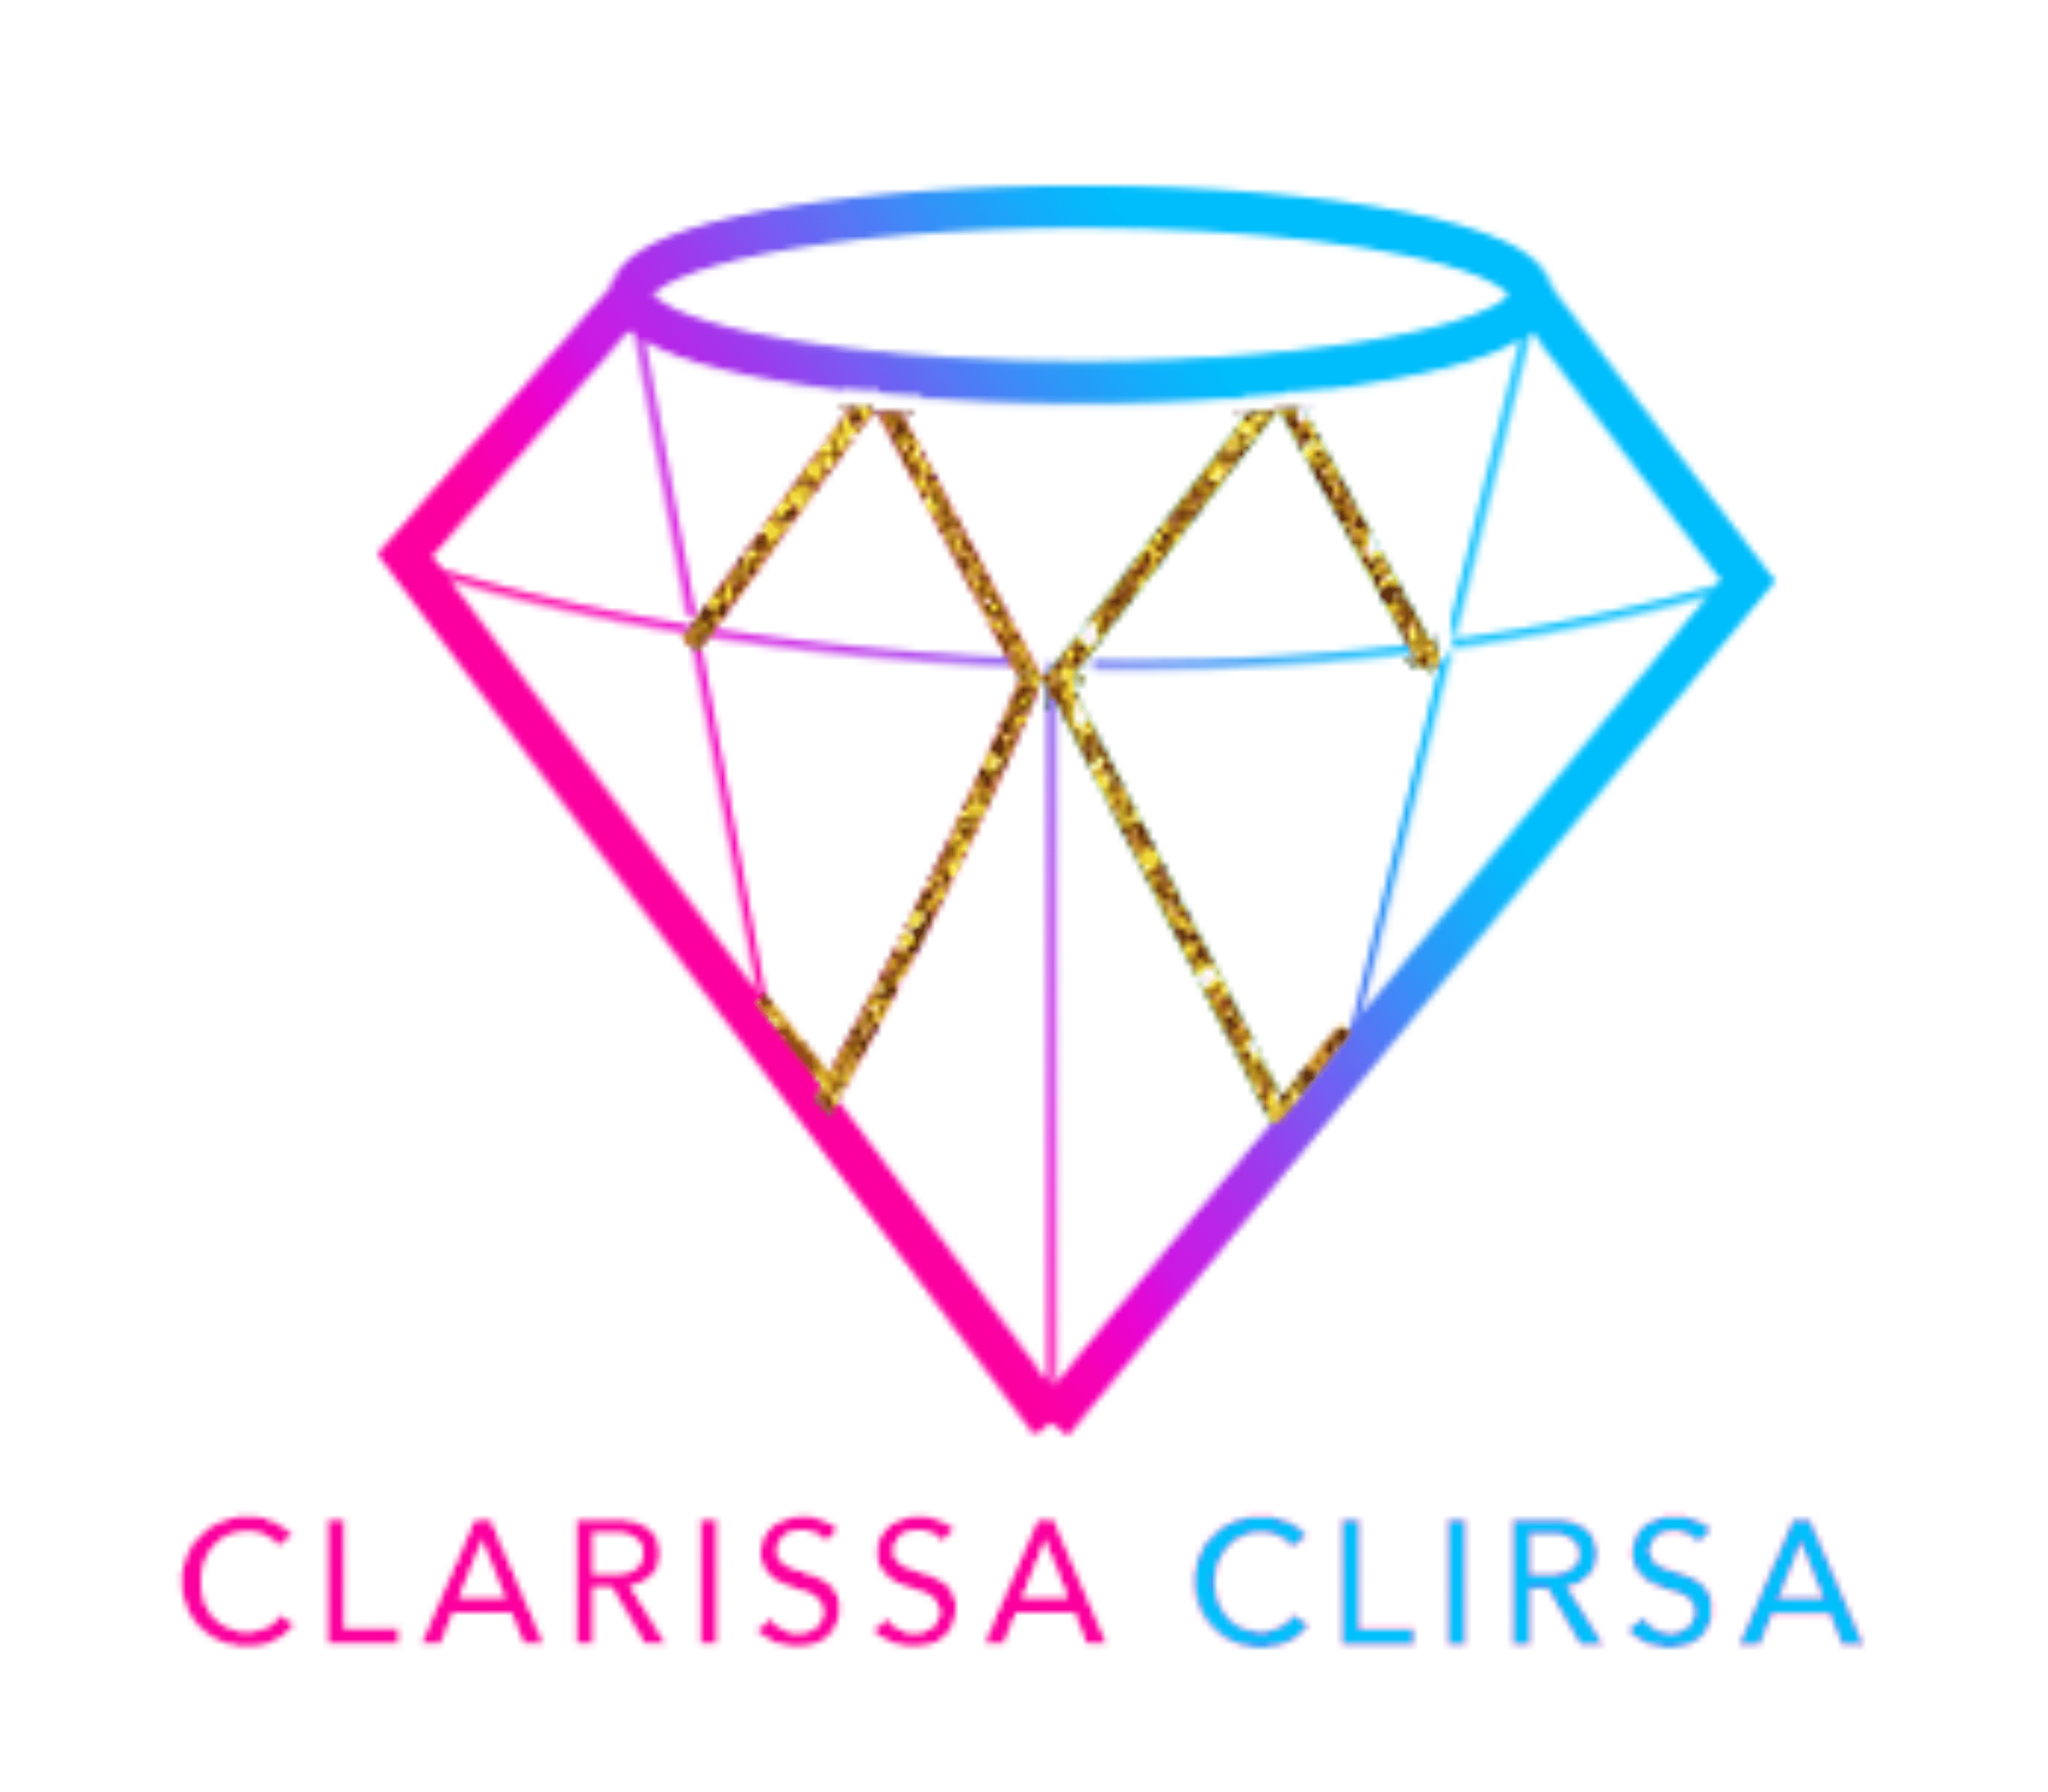 CLARISSA X CLIRSA